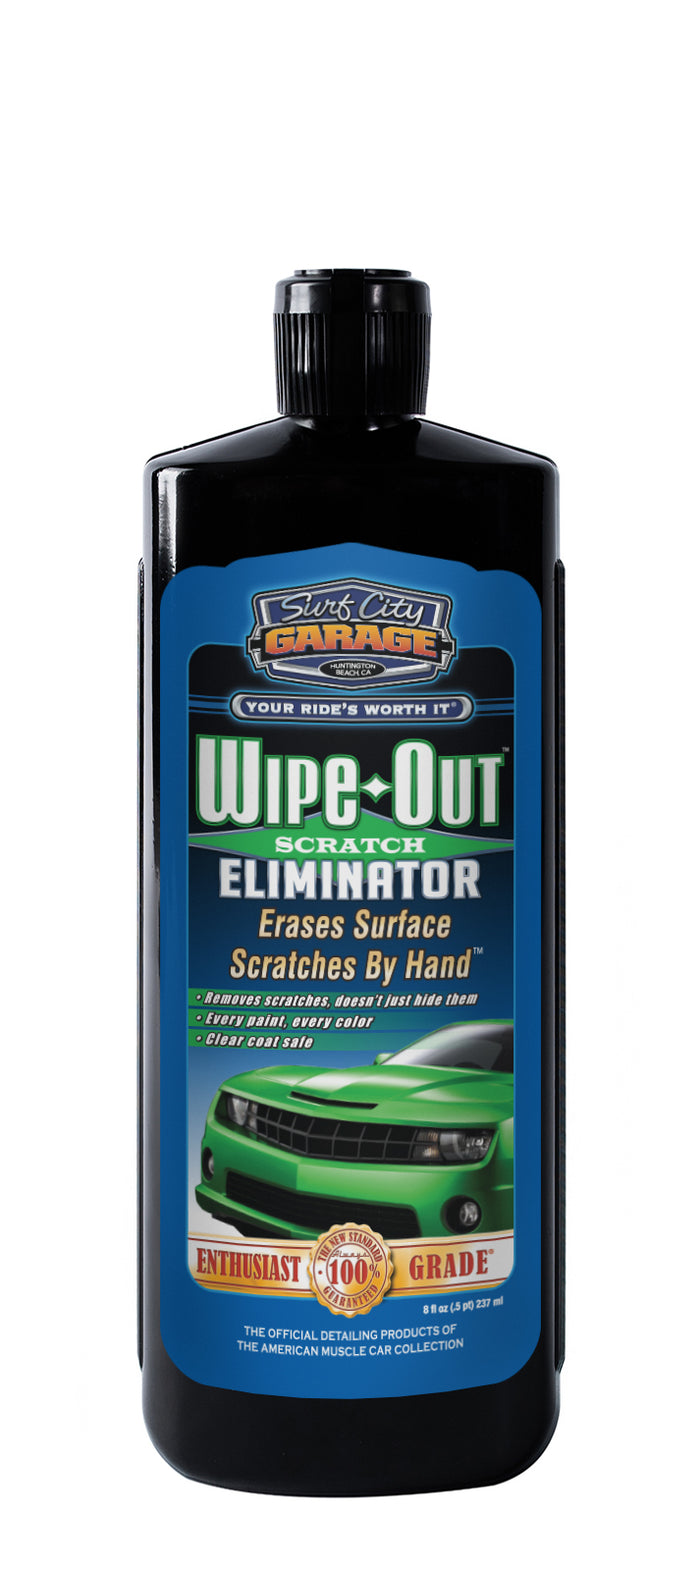 Wipe Out™ Scratch Eliminator